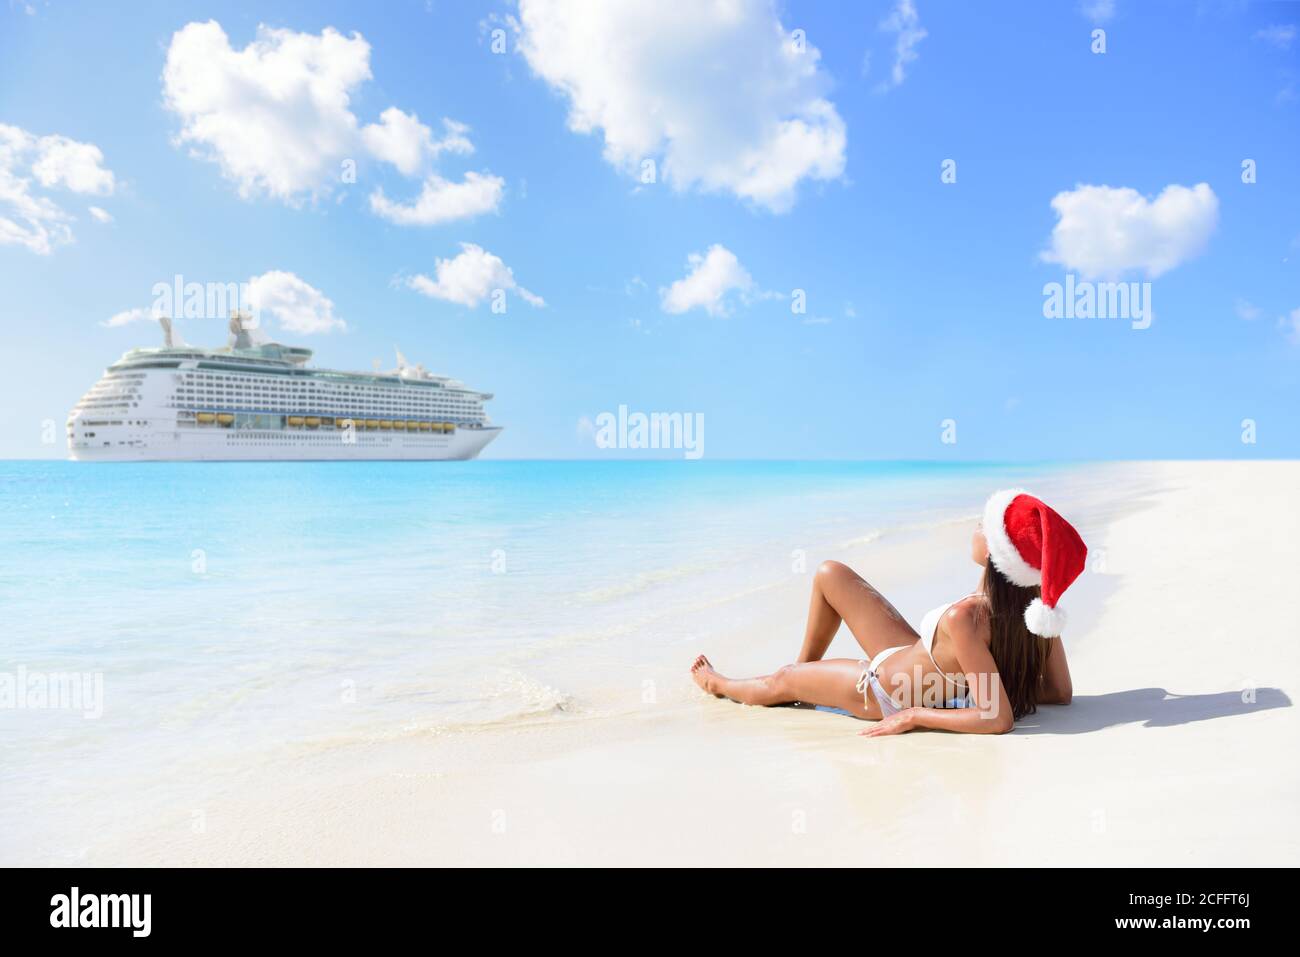 Christmas cruise travel - woman tanning on beach Stock Photo